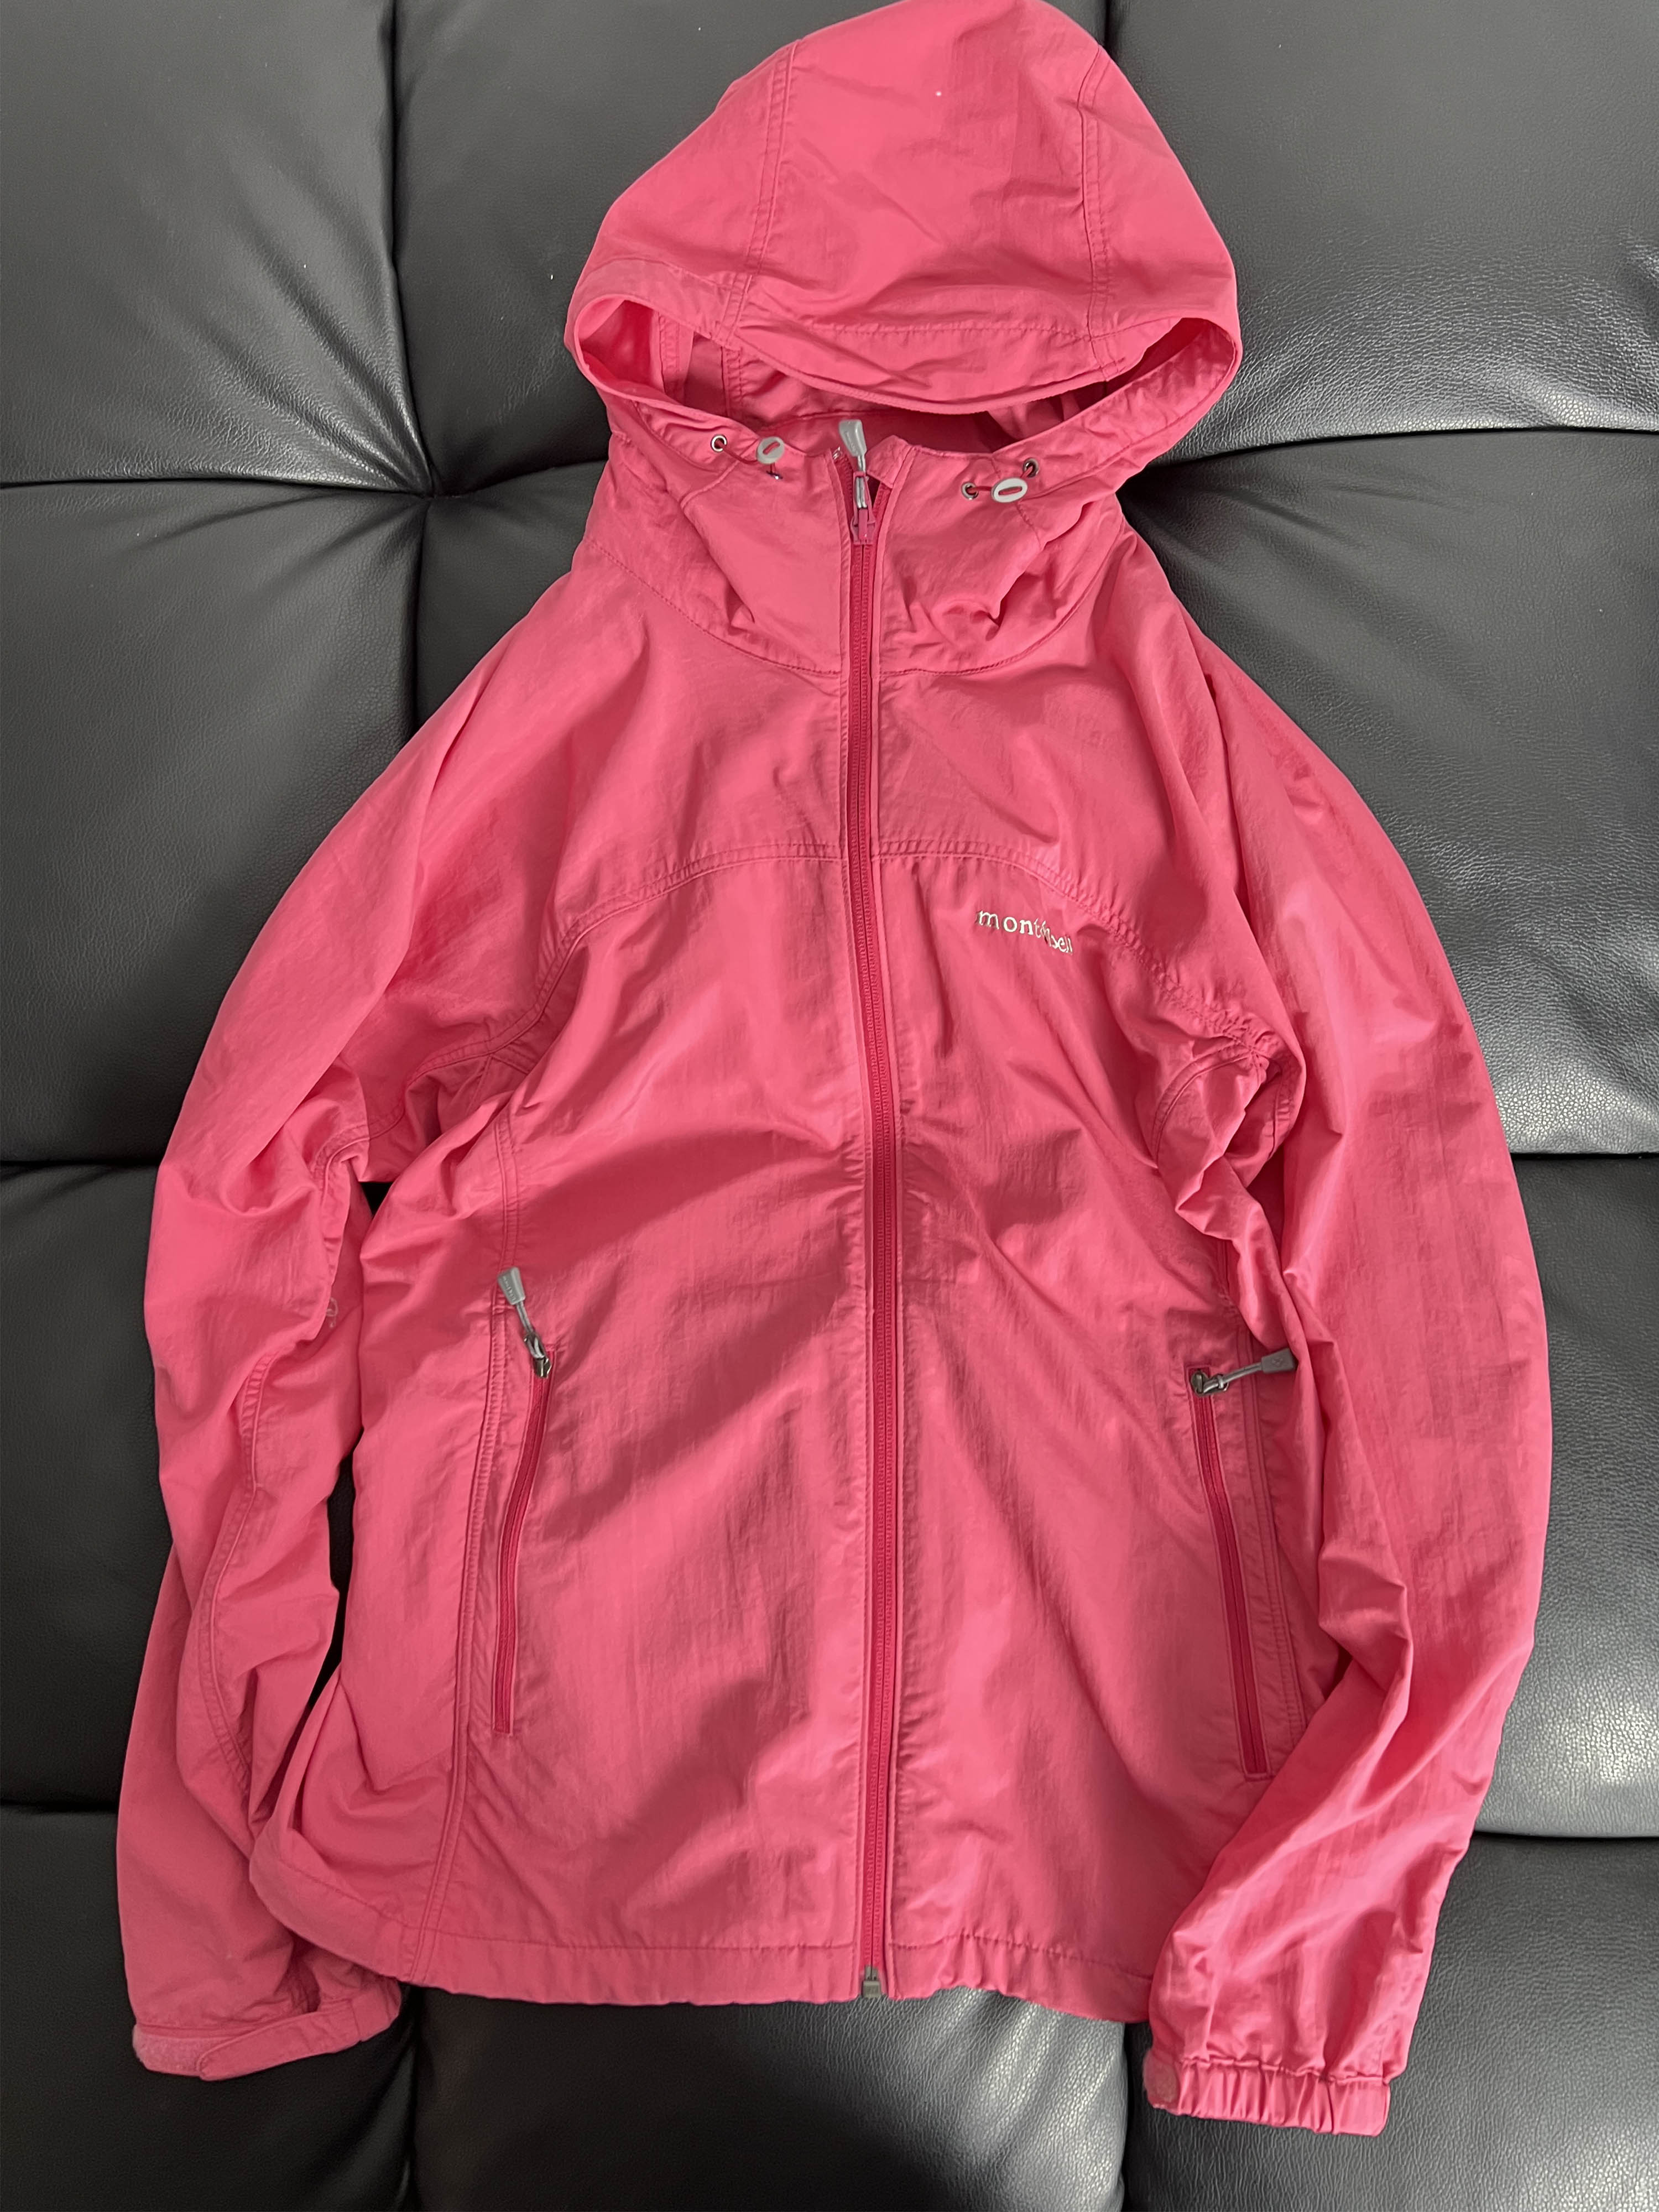 mont-bell pink jacket